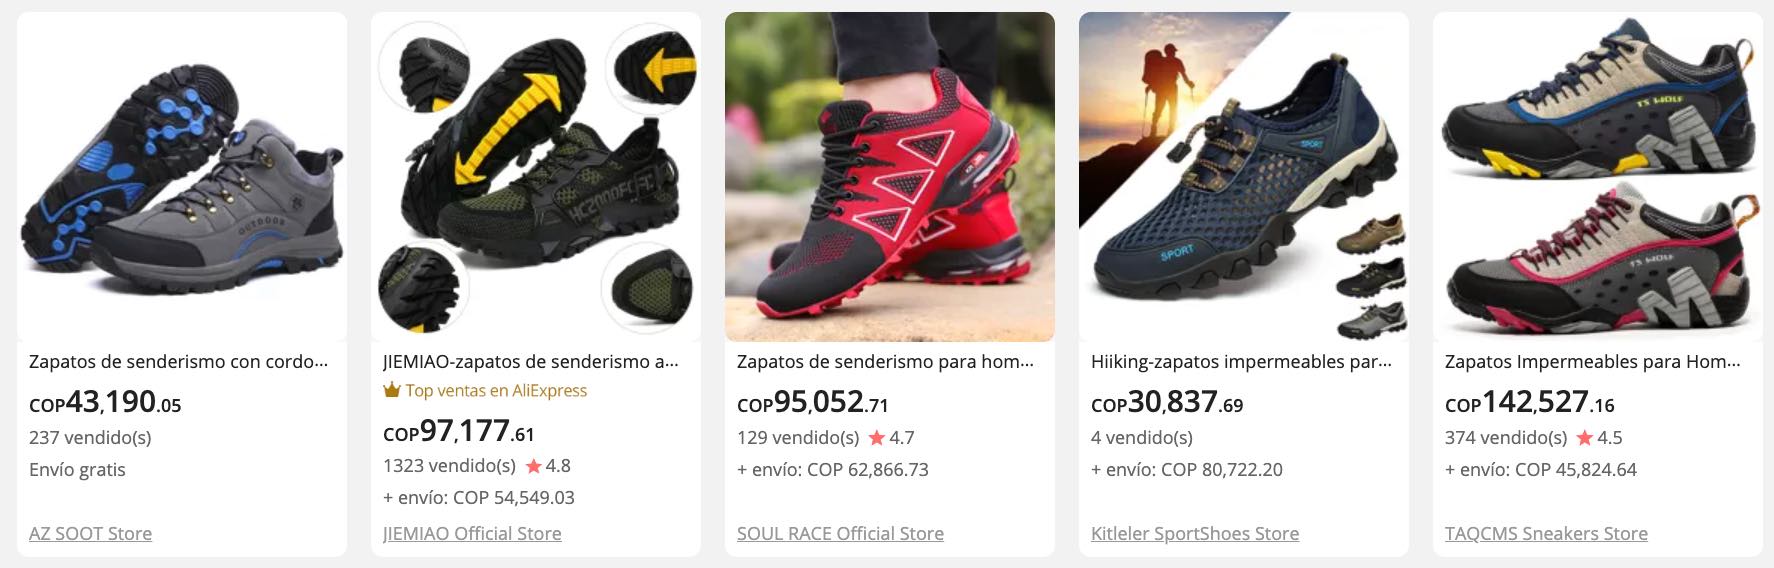 comprar zapatillas para trekking en aliexpress chile